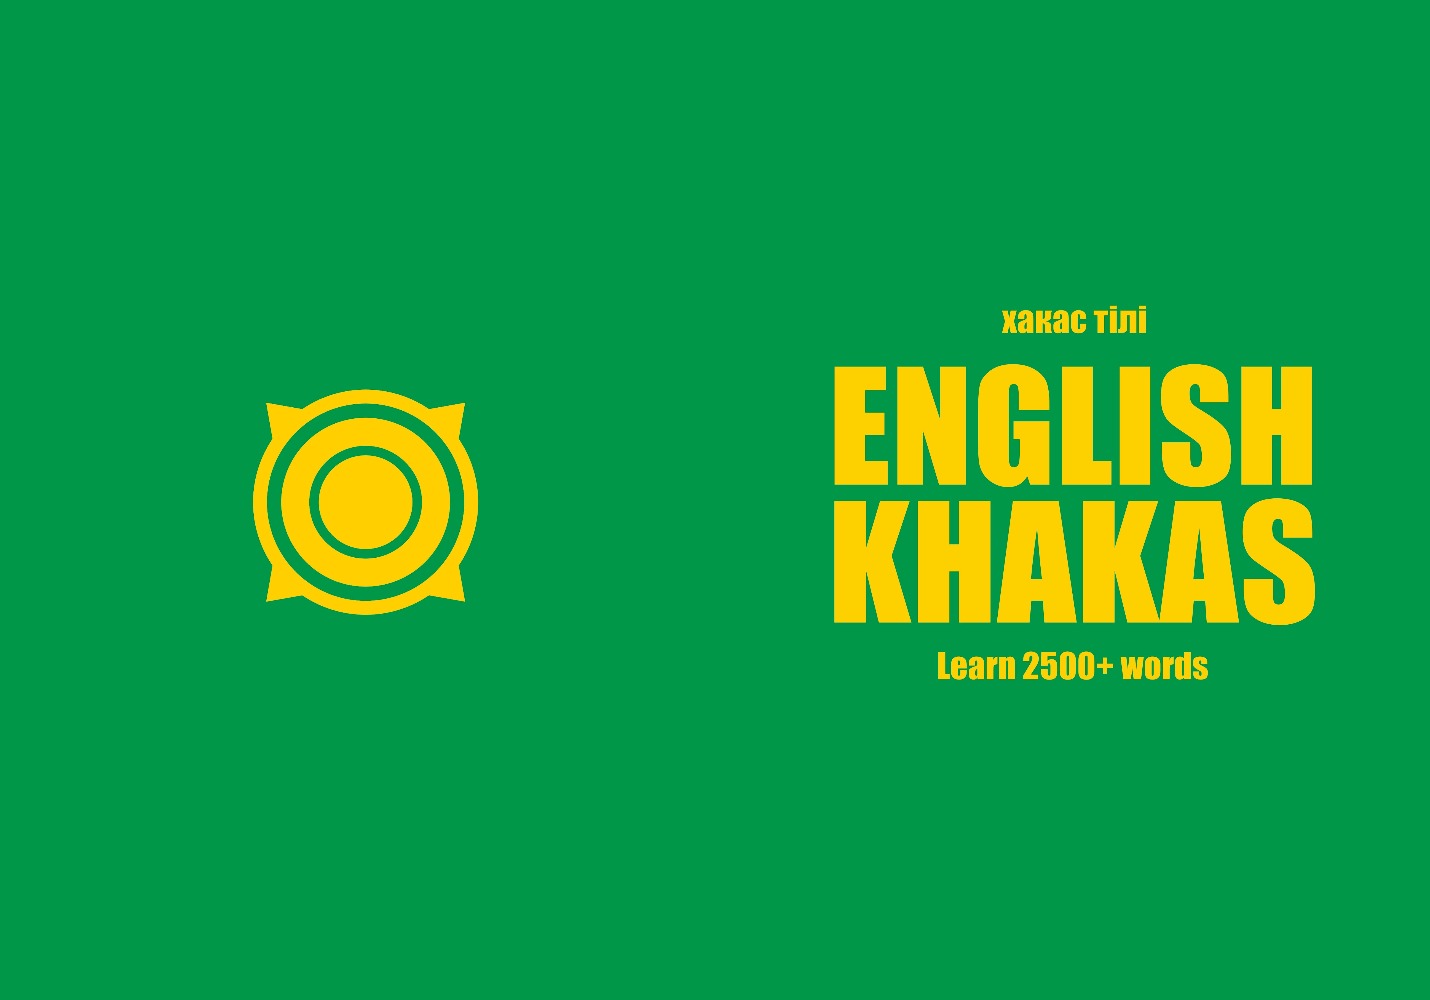 Khakas language learning notebook cover